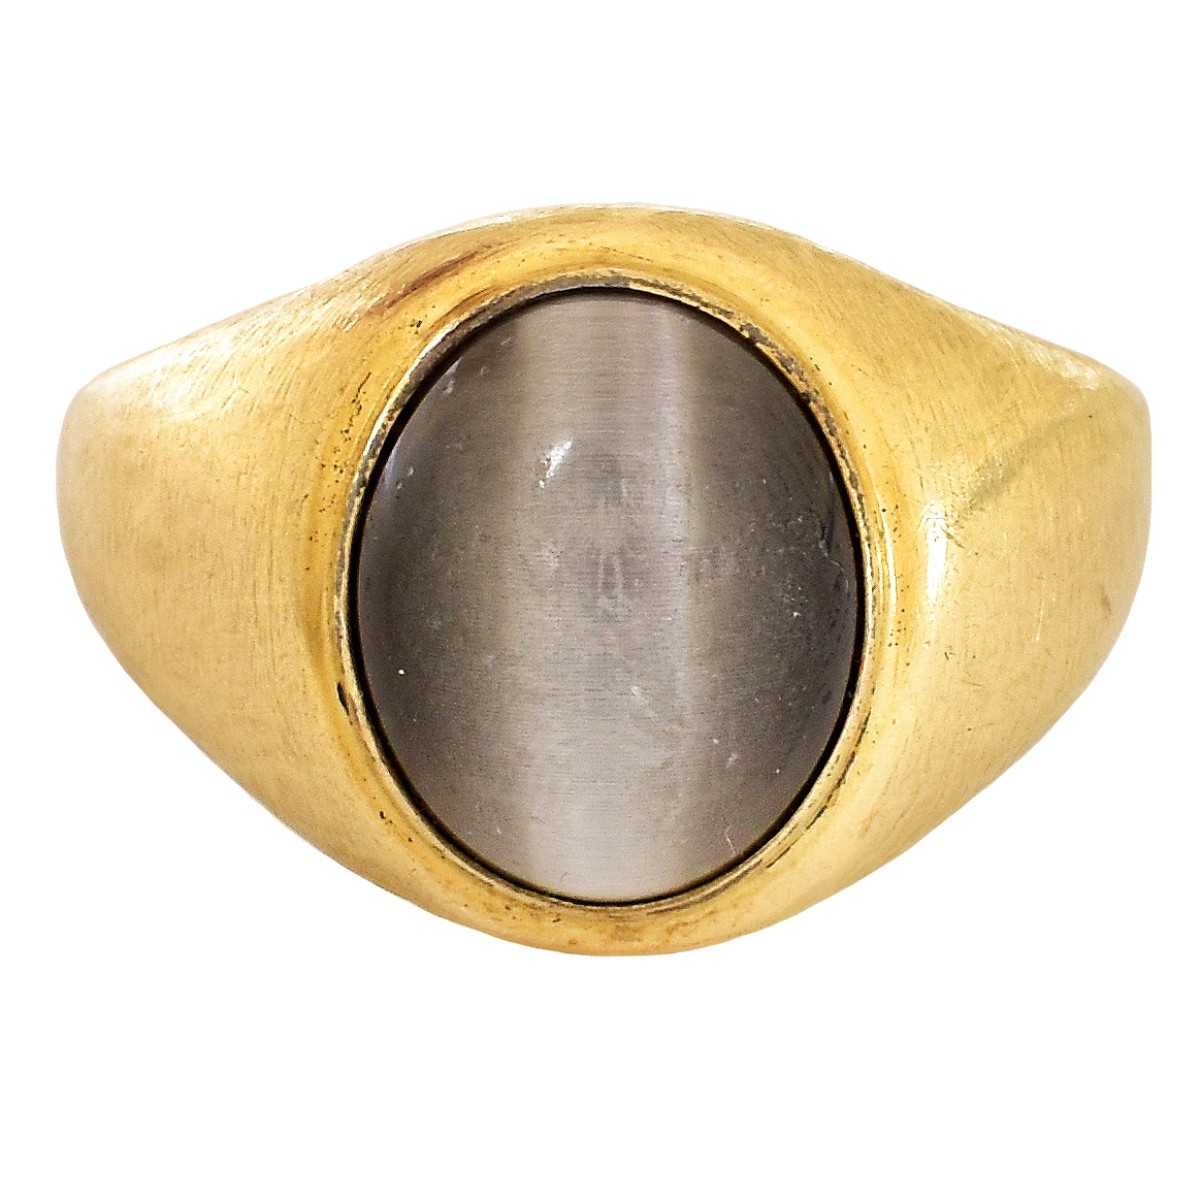 Man's Vintage Cat Eye and 10K Gold Ring